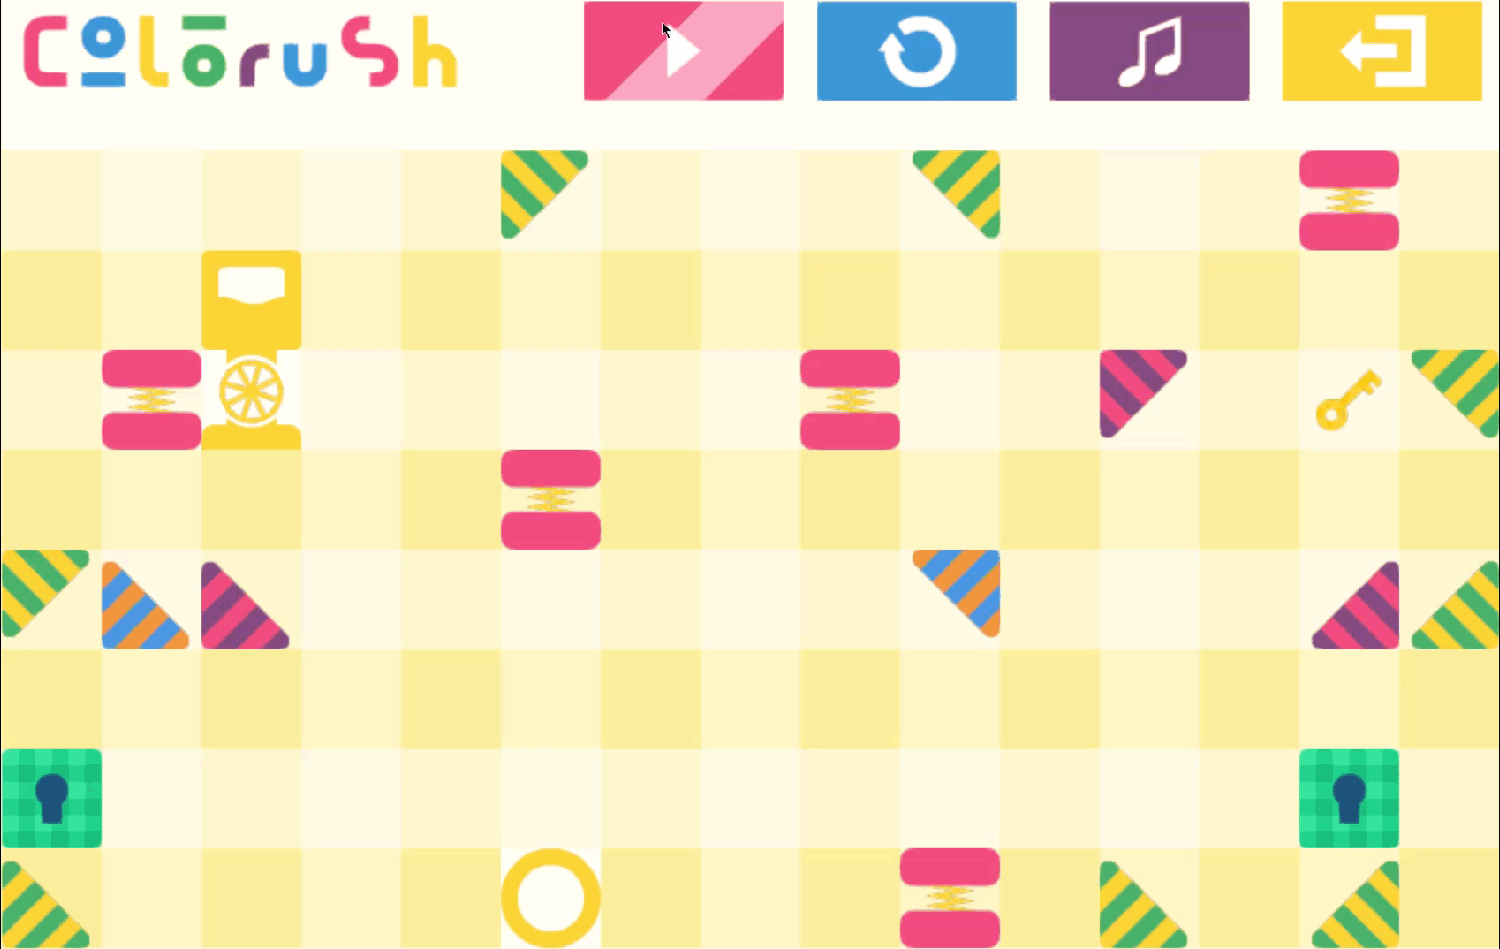 Colorush Game Level 20 Screenshot.